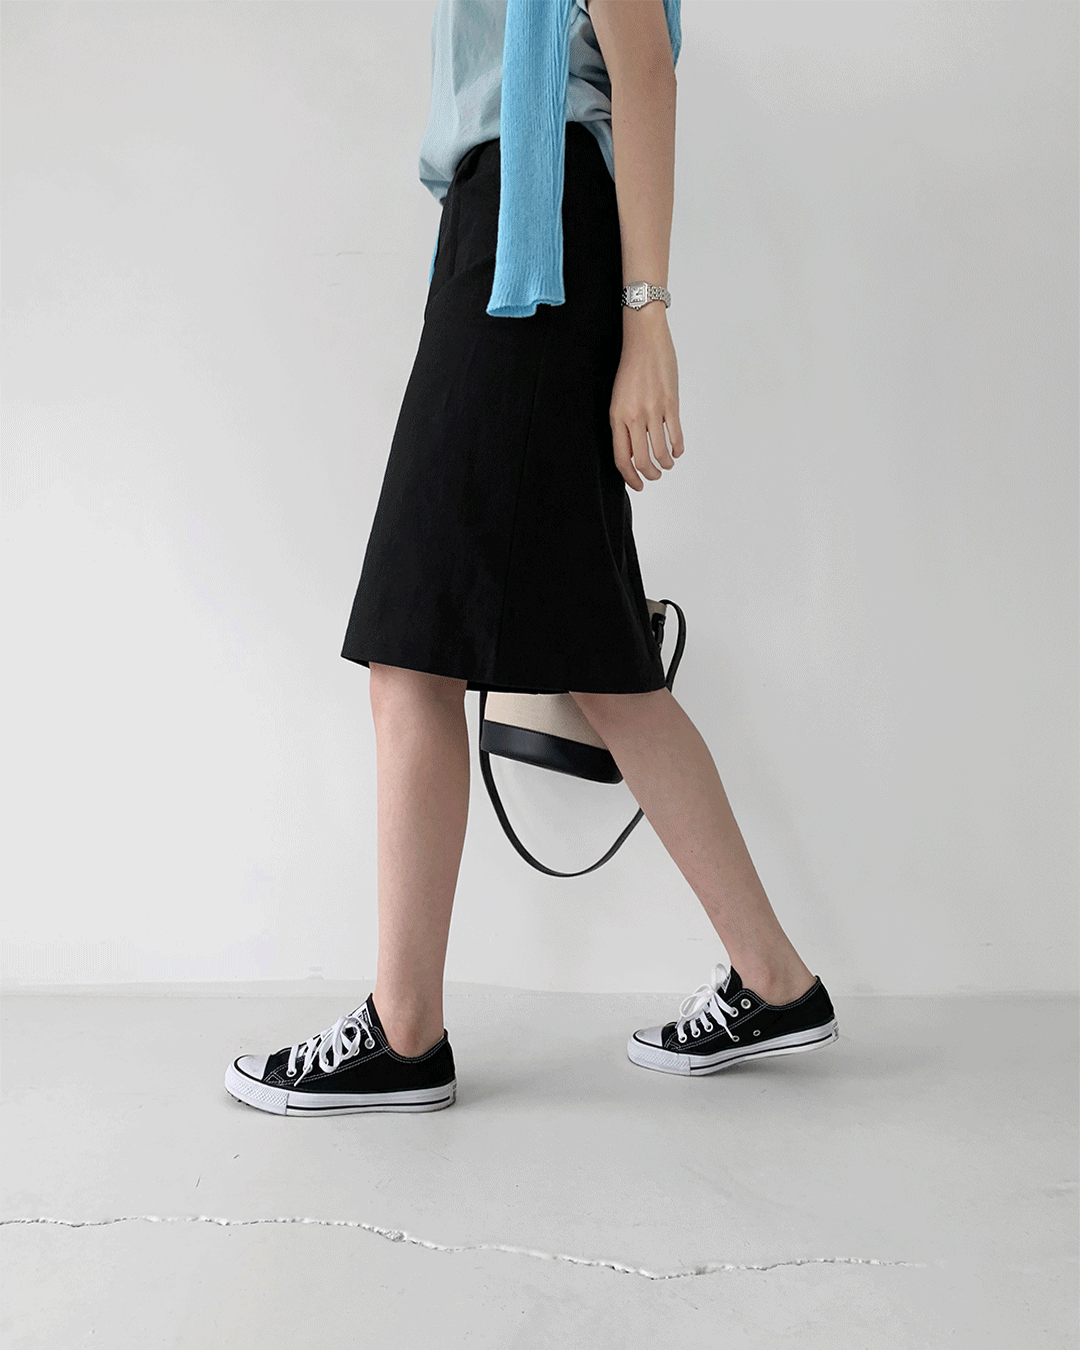 Walk skirt